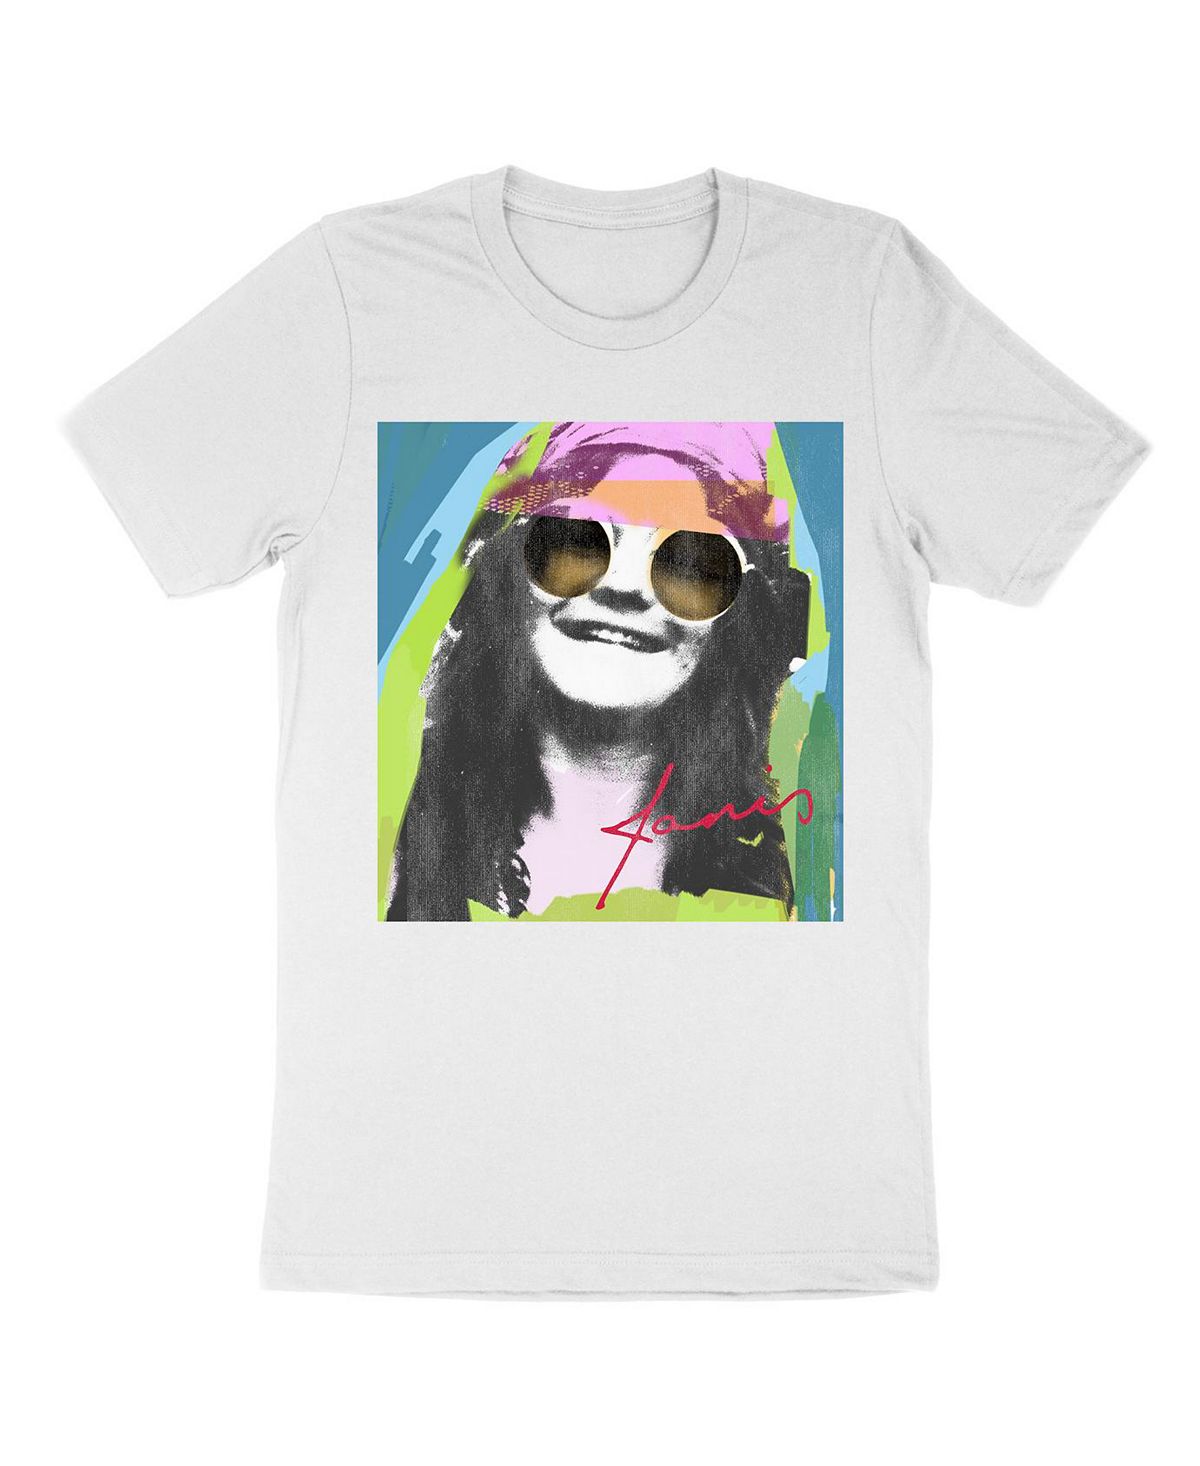 Мужская футболка с графикой janis psychedelic MONSTER DIGITAL TSC, белый